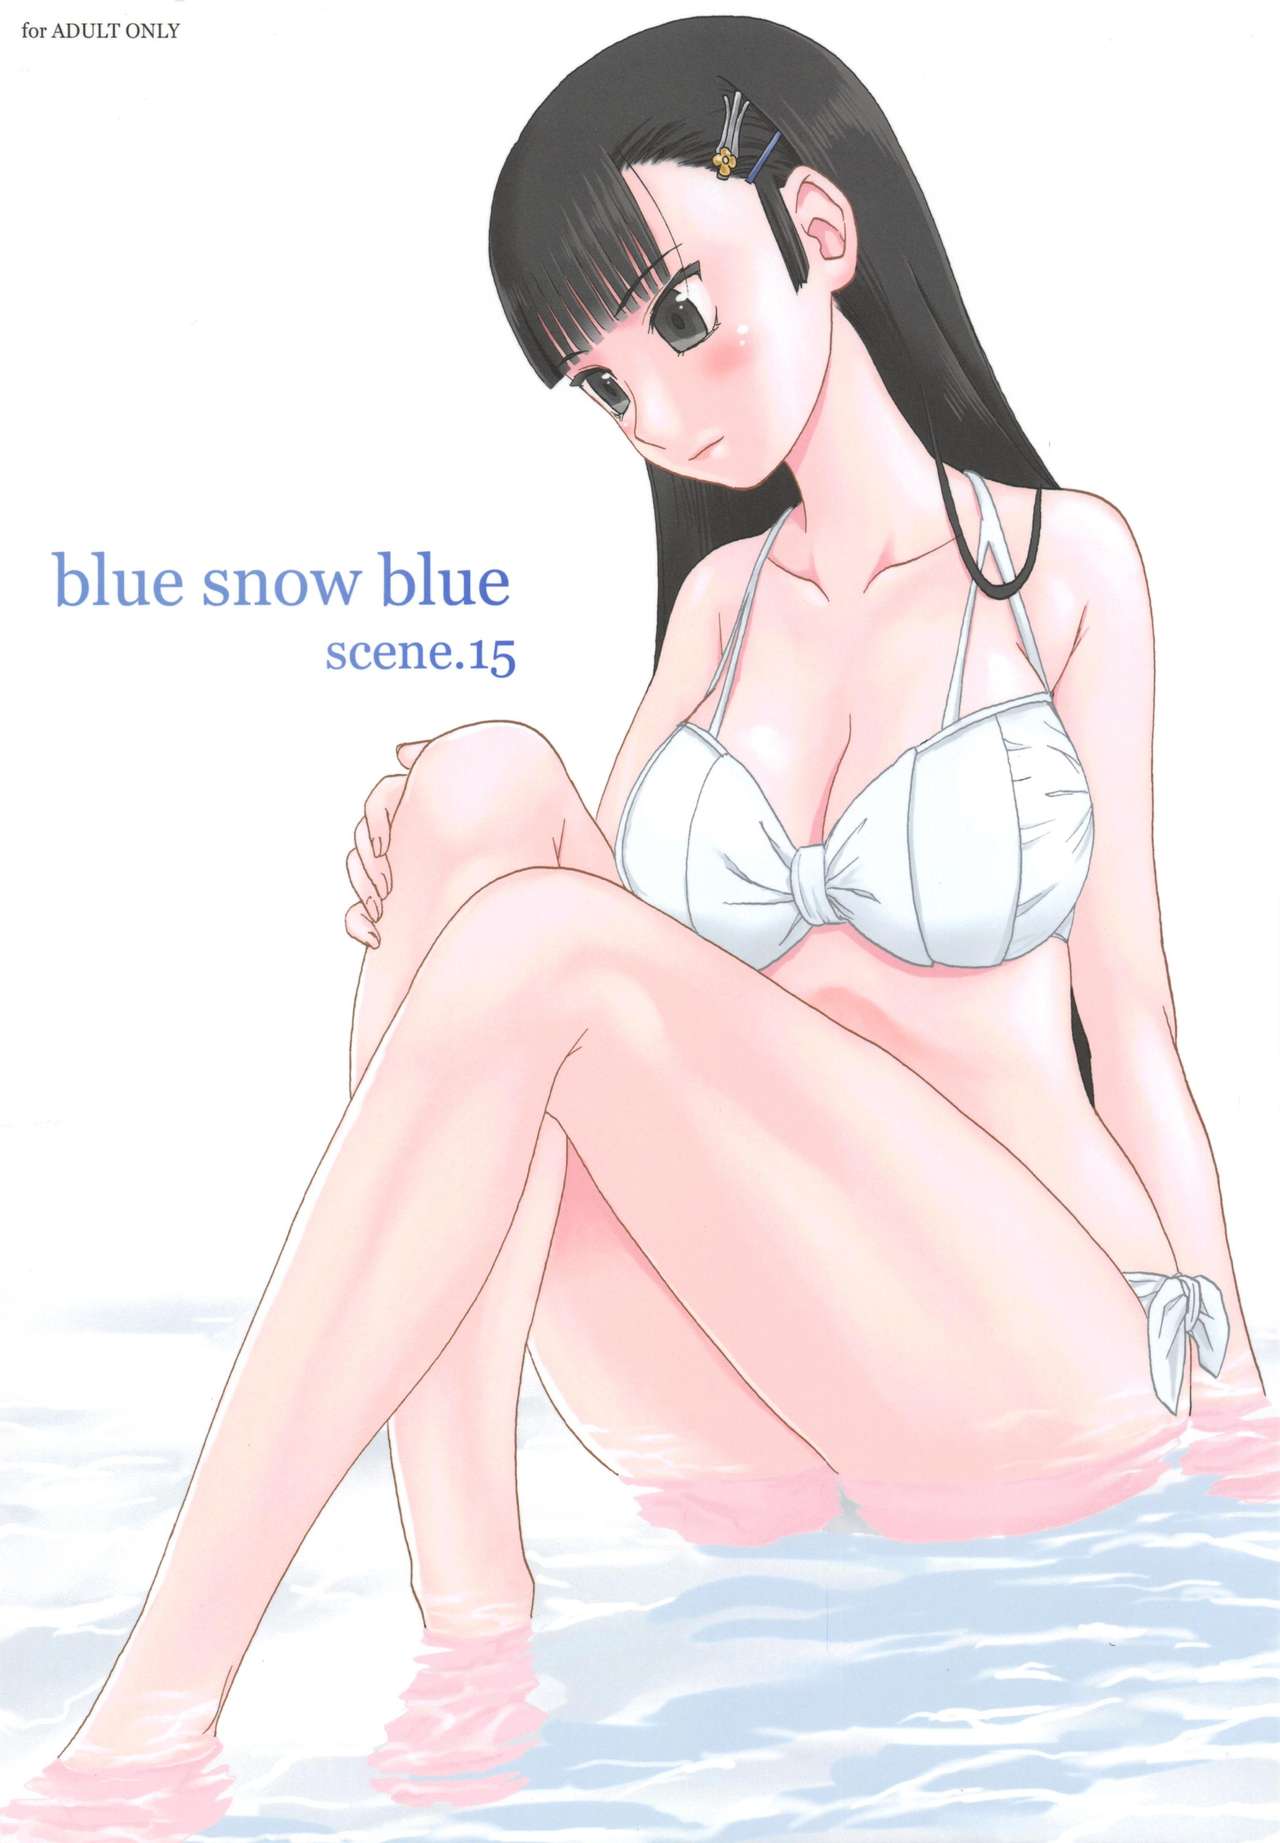 [Tennouji Kitsune] blue snow blue 15 (Korean) 